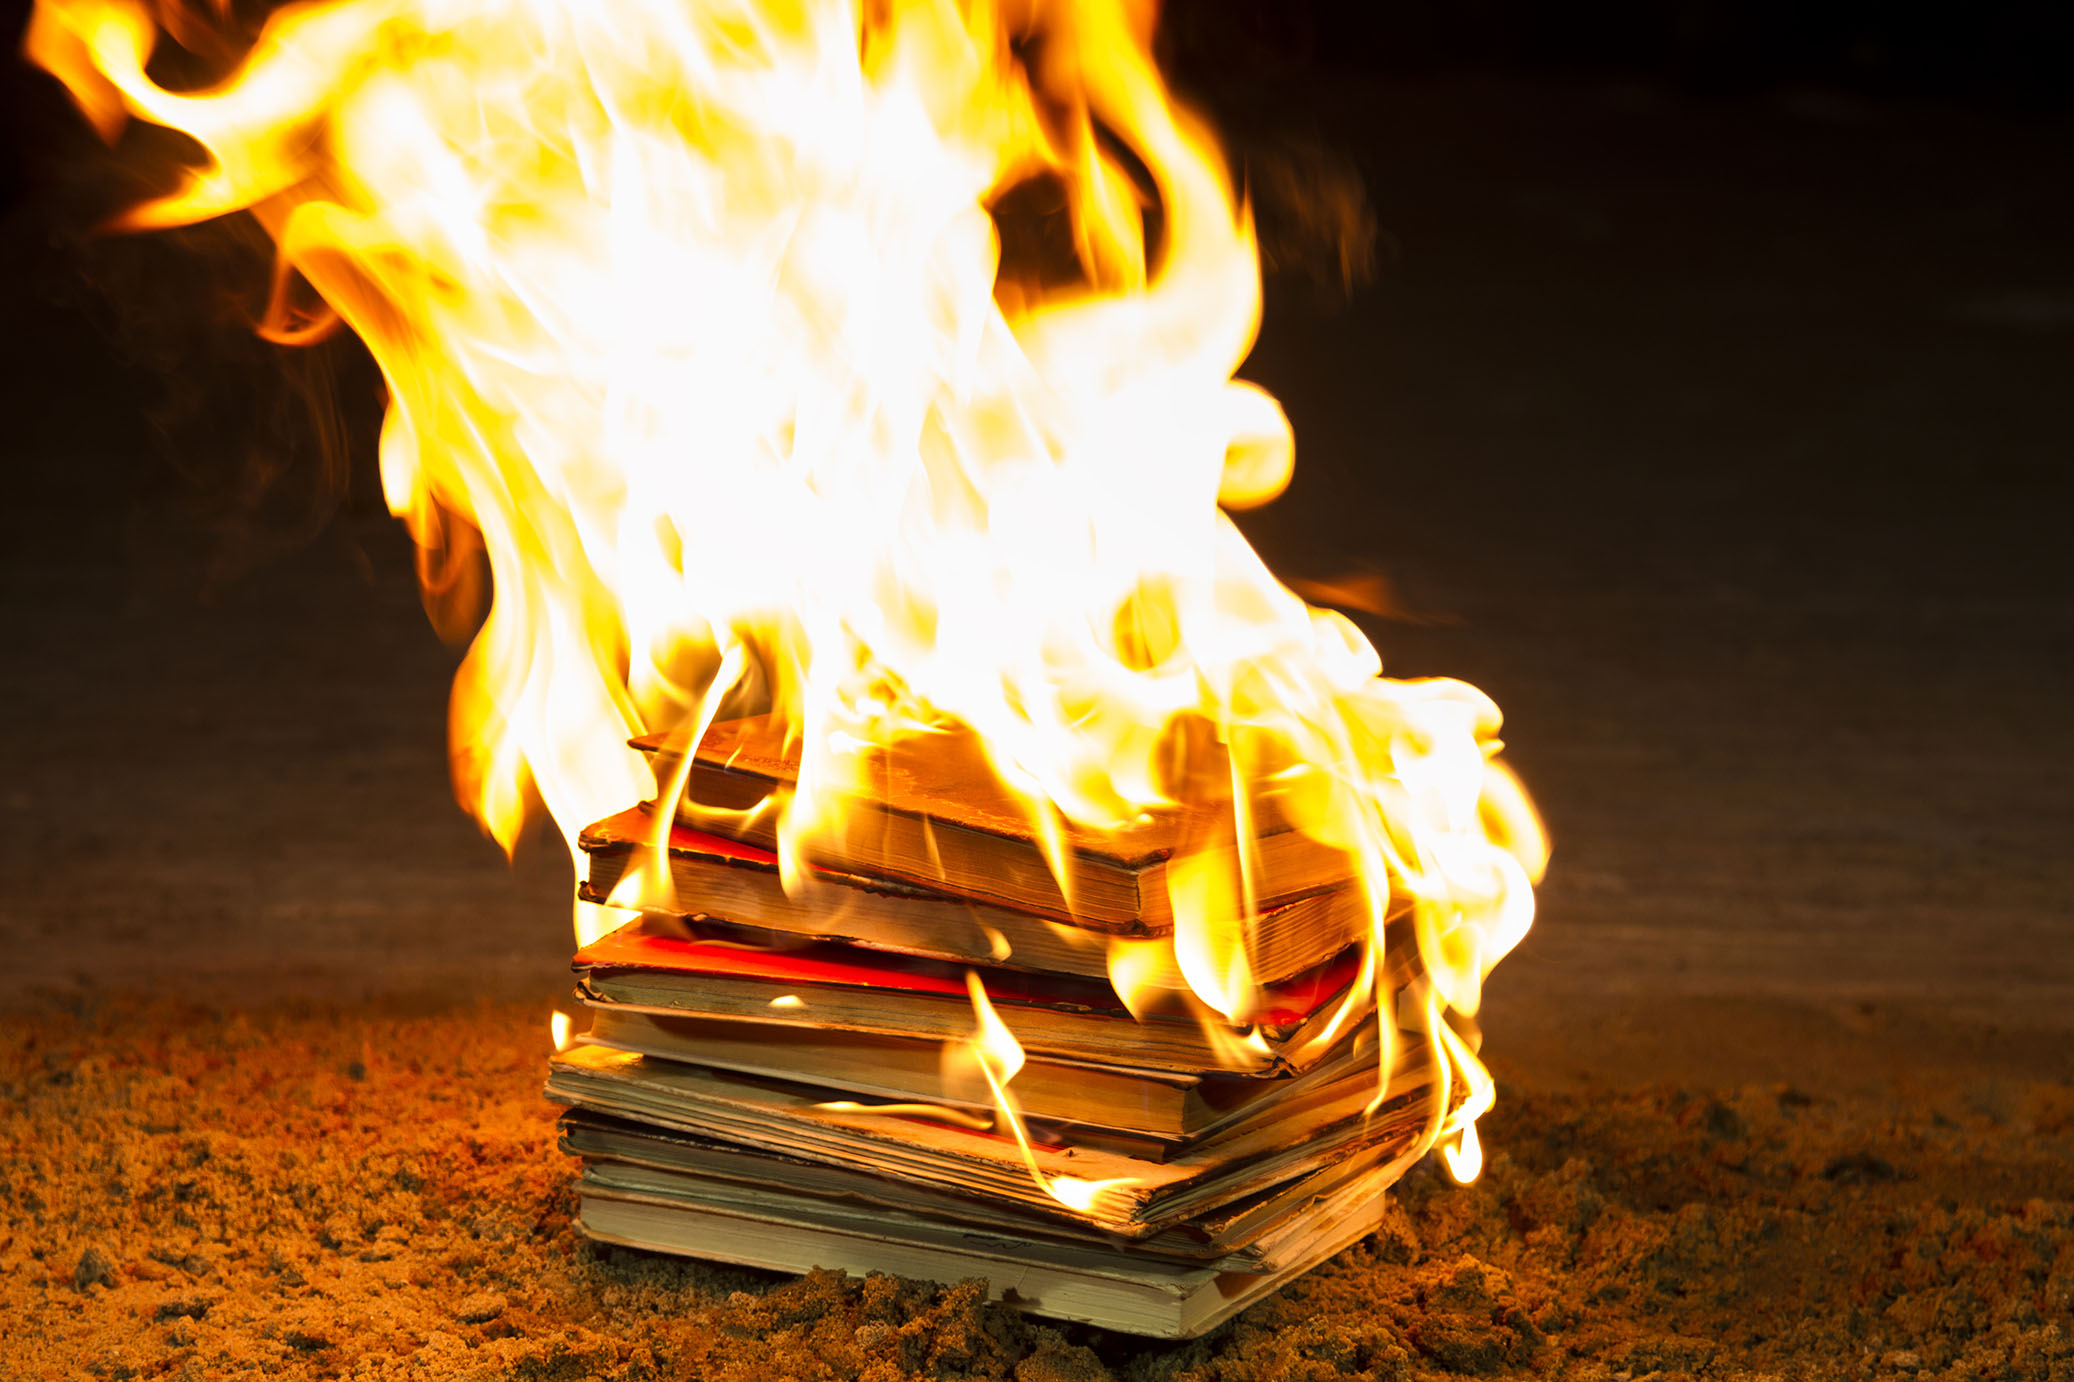 summarize why books are burned